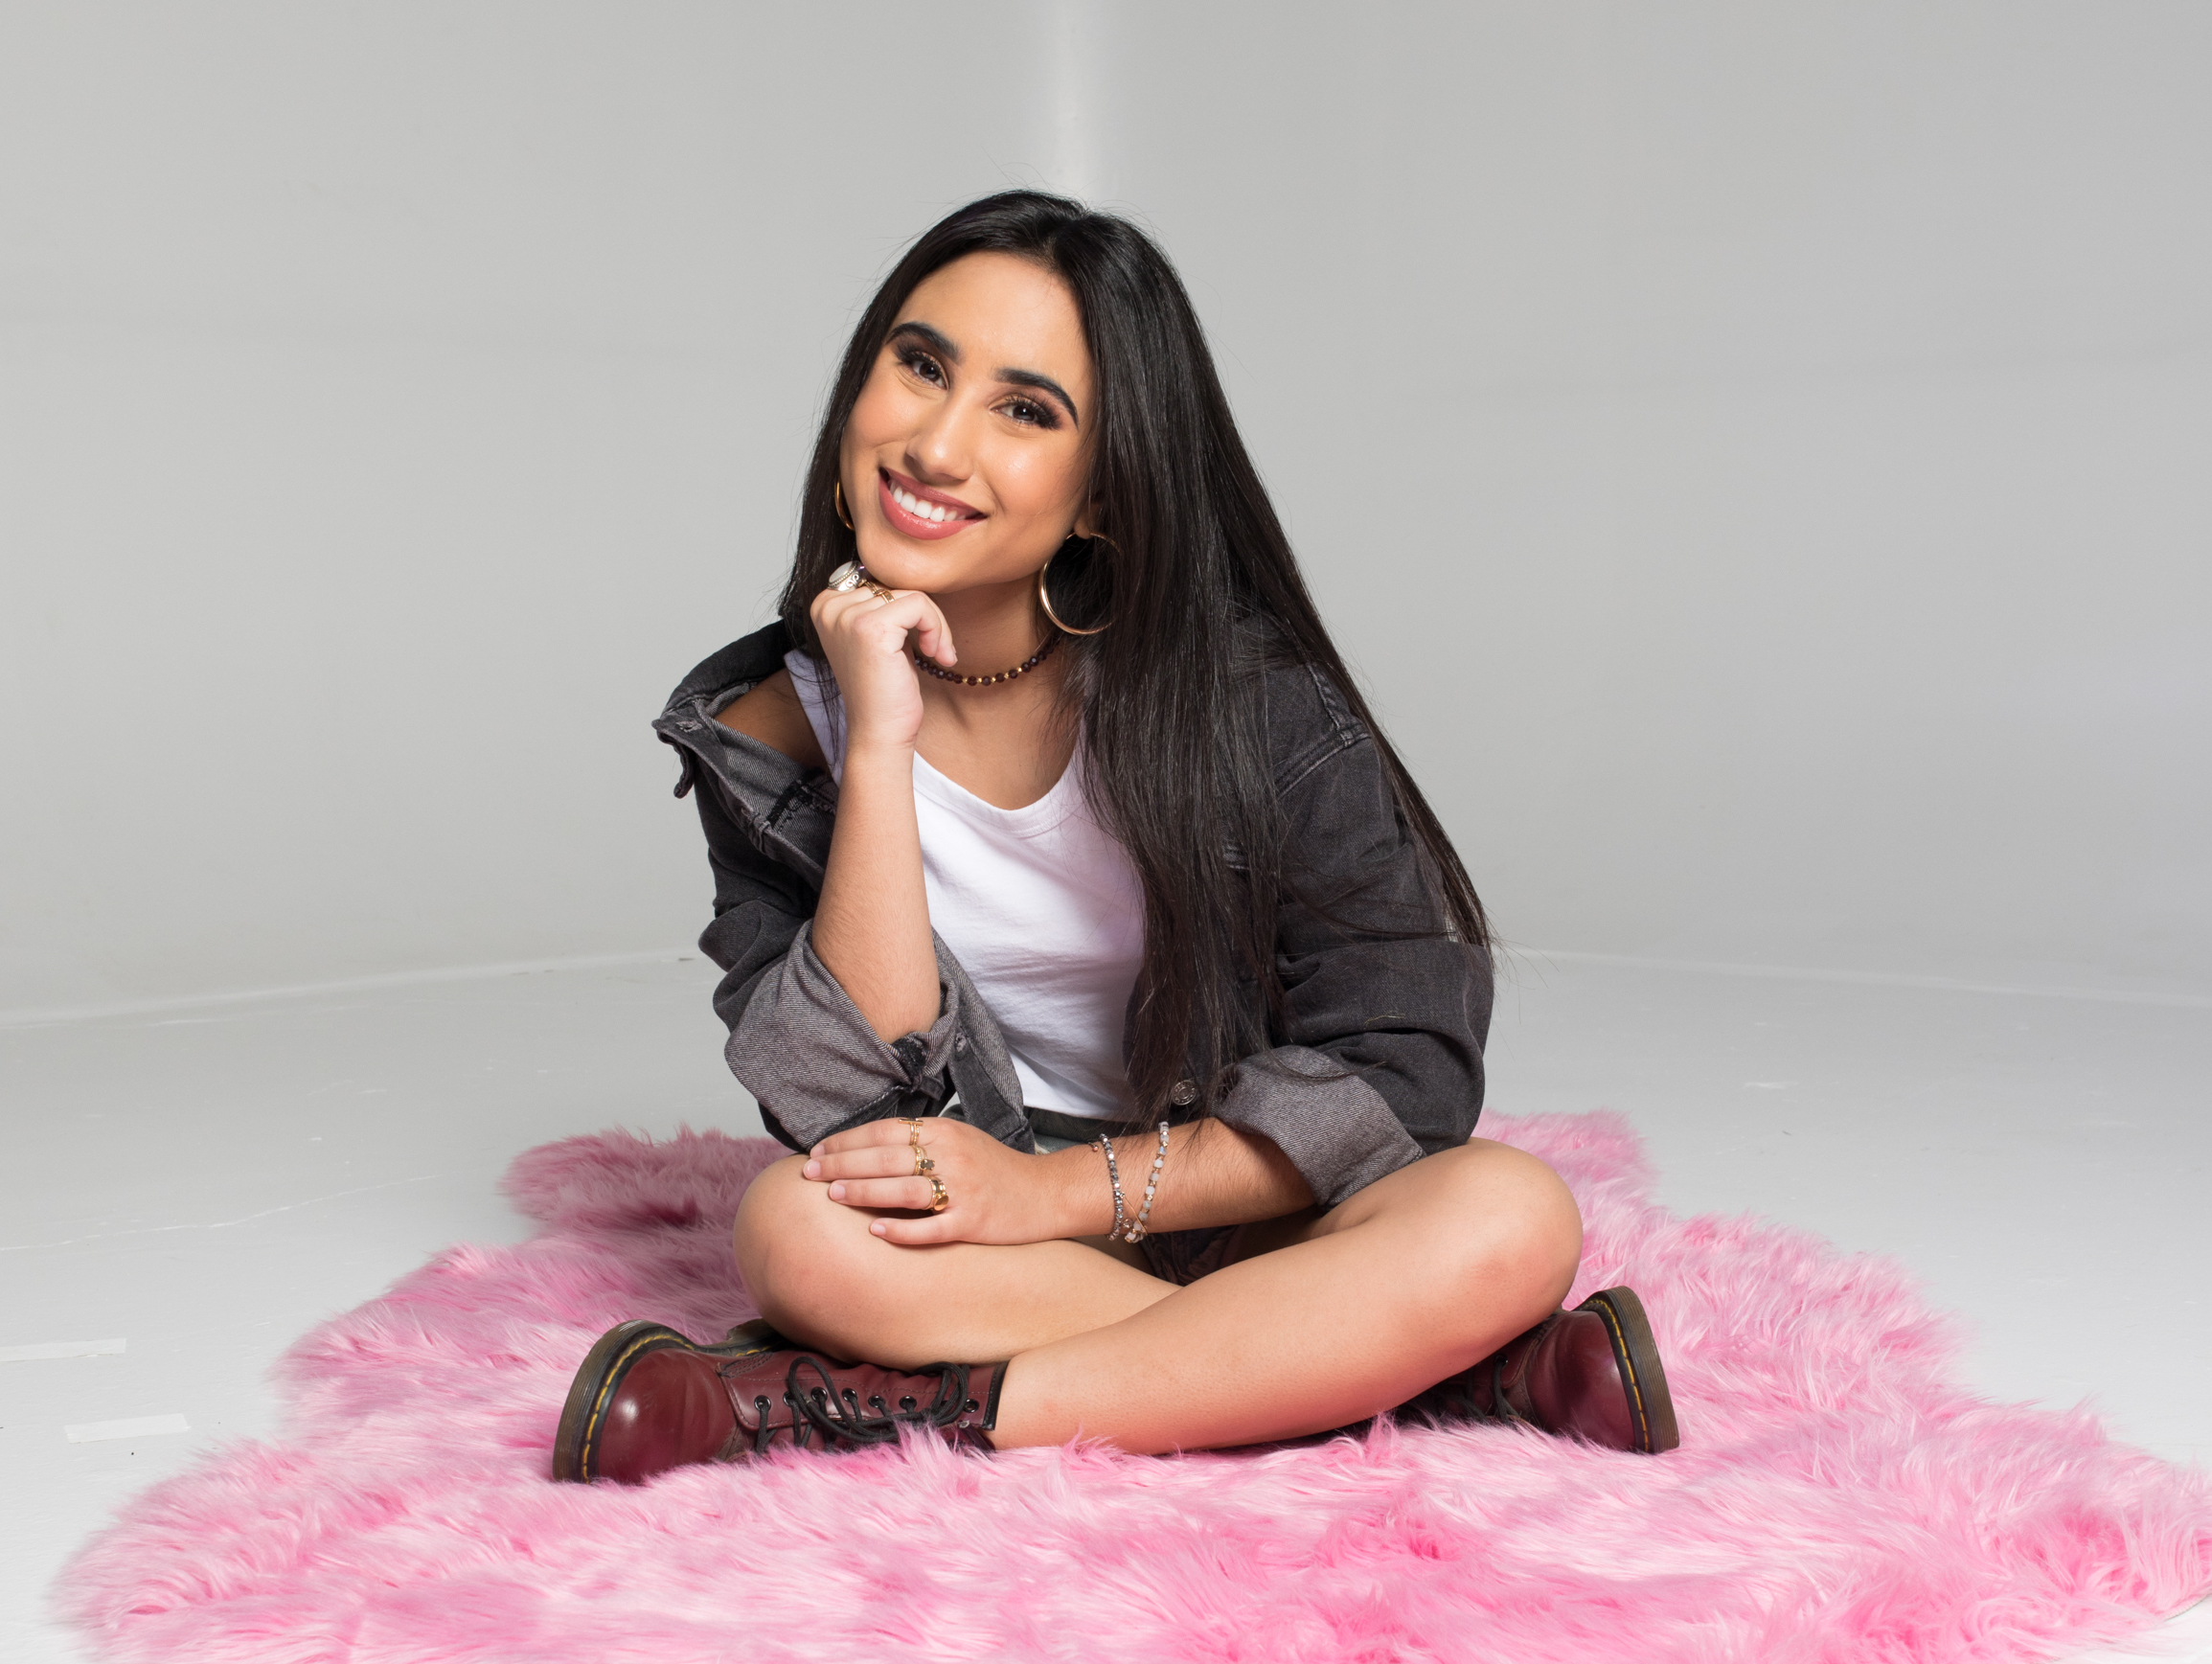 Meet Analise Hoveyda: Gen Z's Rising Pop Star